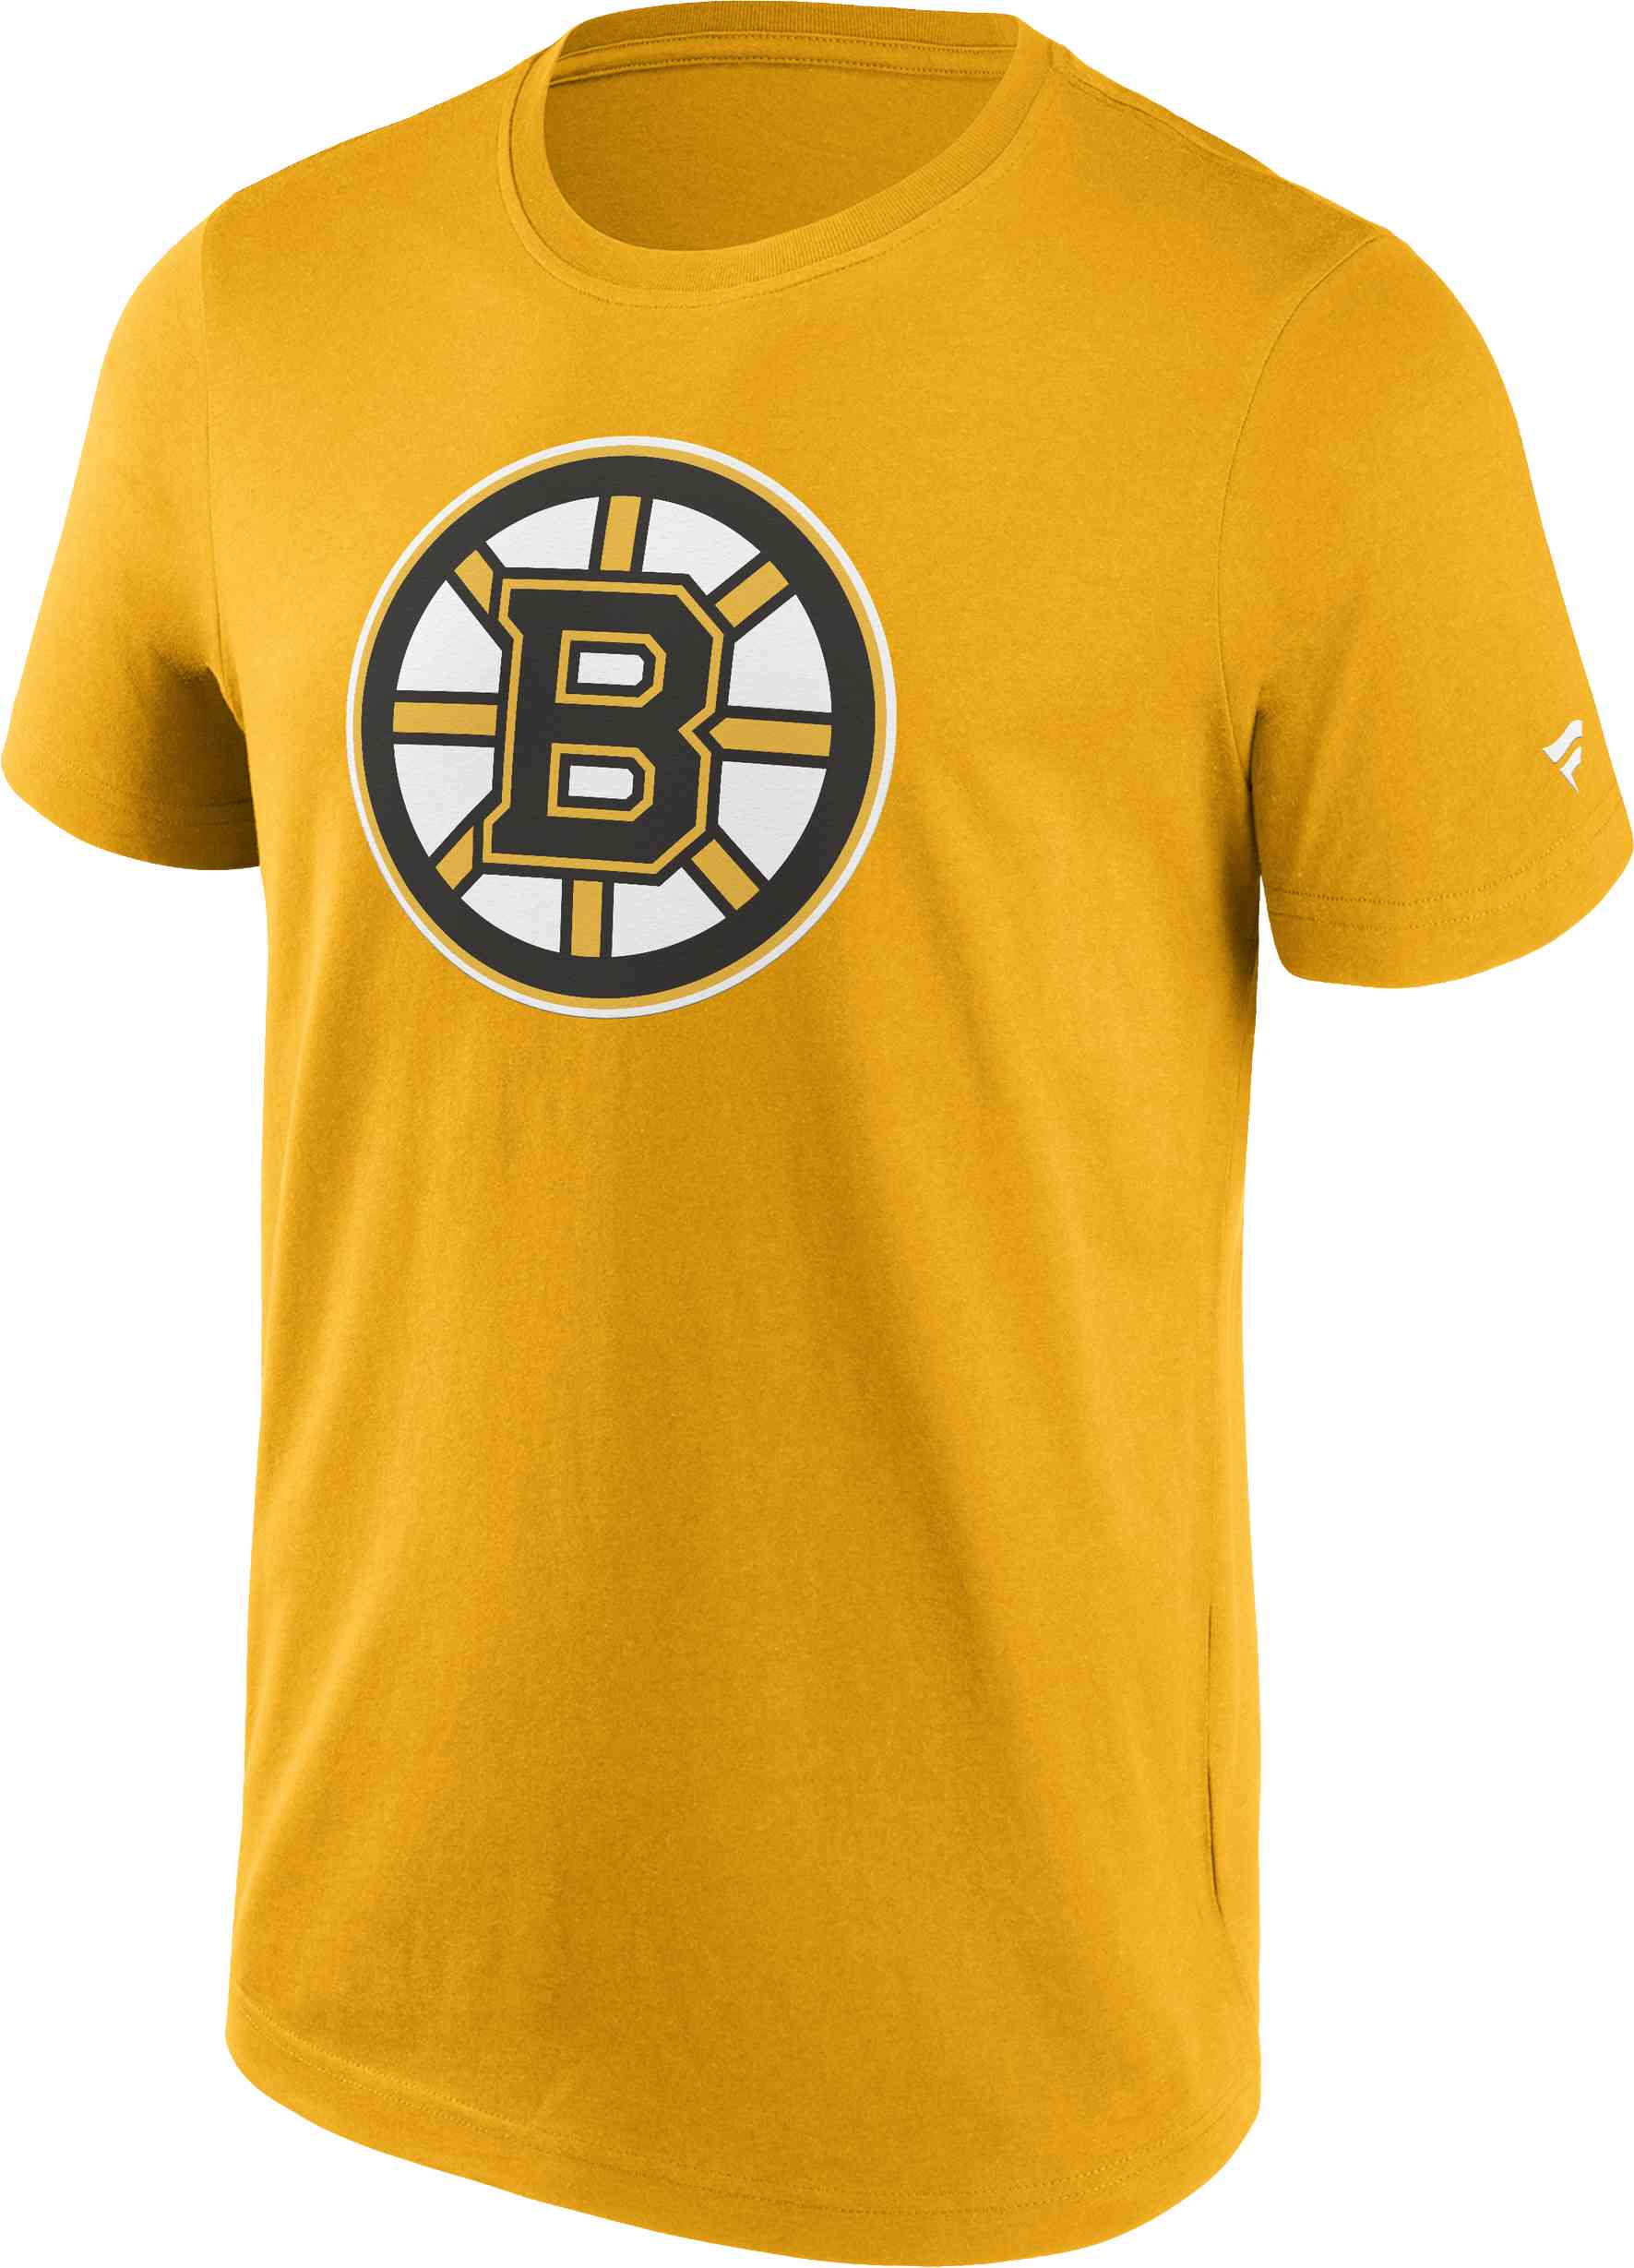 Fanatics - NHL Boston Bruins Primary Logo Graphic T-Shirt